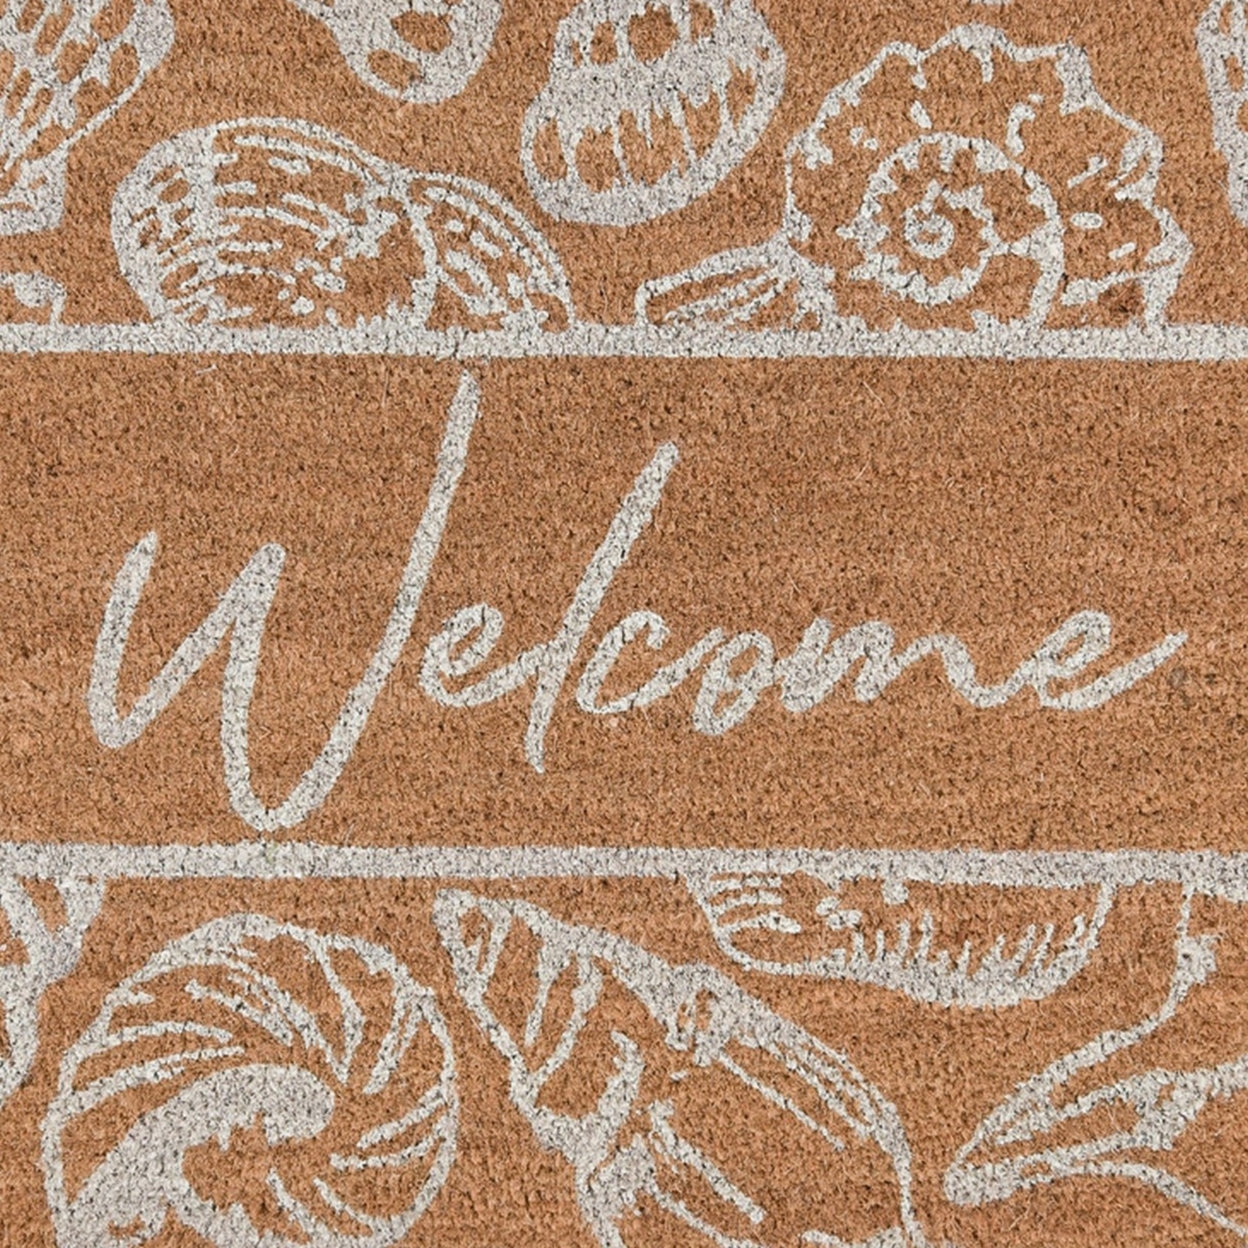 24 X 36 Coir Coastal Welcome Doormat, White Calligraphy Print, Brown- Saltoro Sherpi